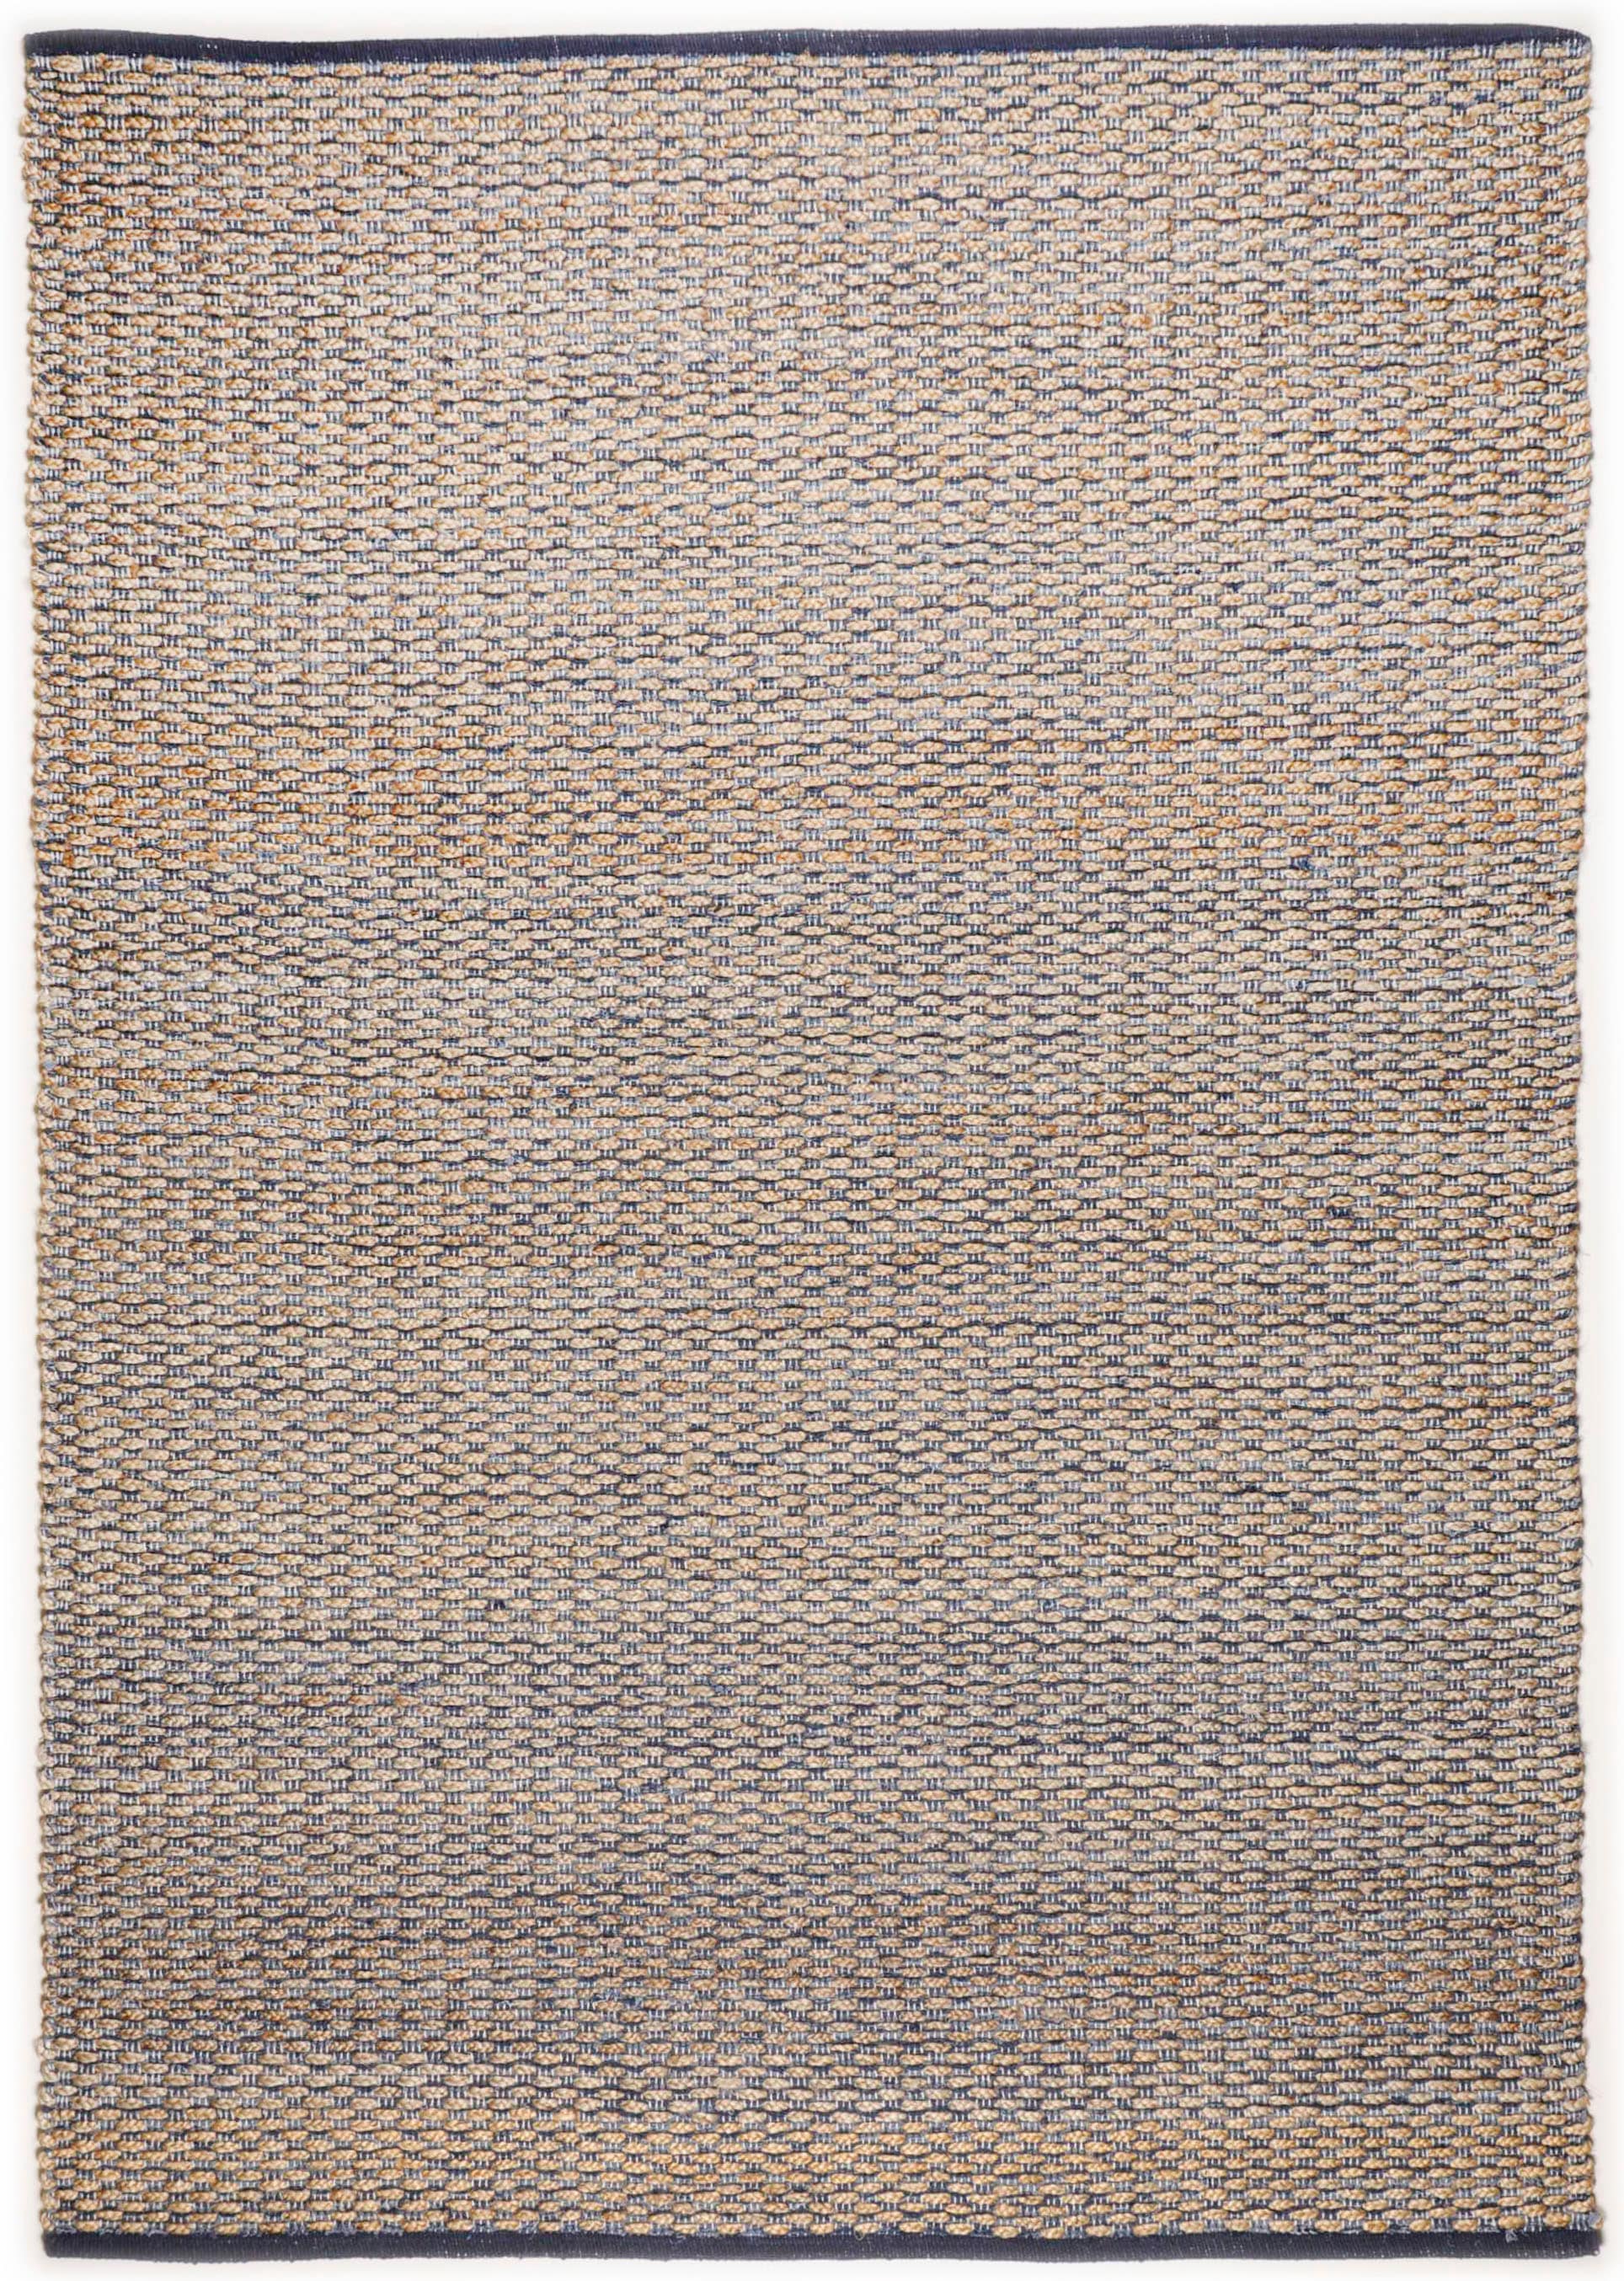 Teppich »Braid«, rechteckig, Flachgewebe, handgewebt, Material: 70% Jute, 30% Baumwolle